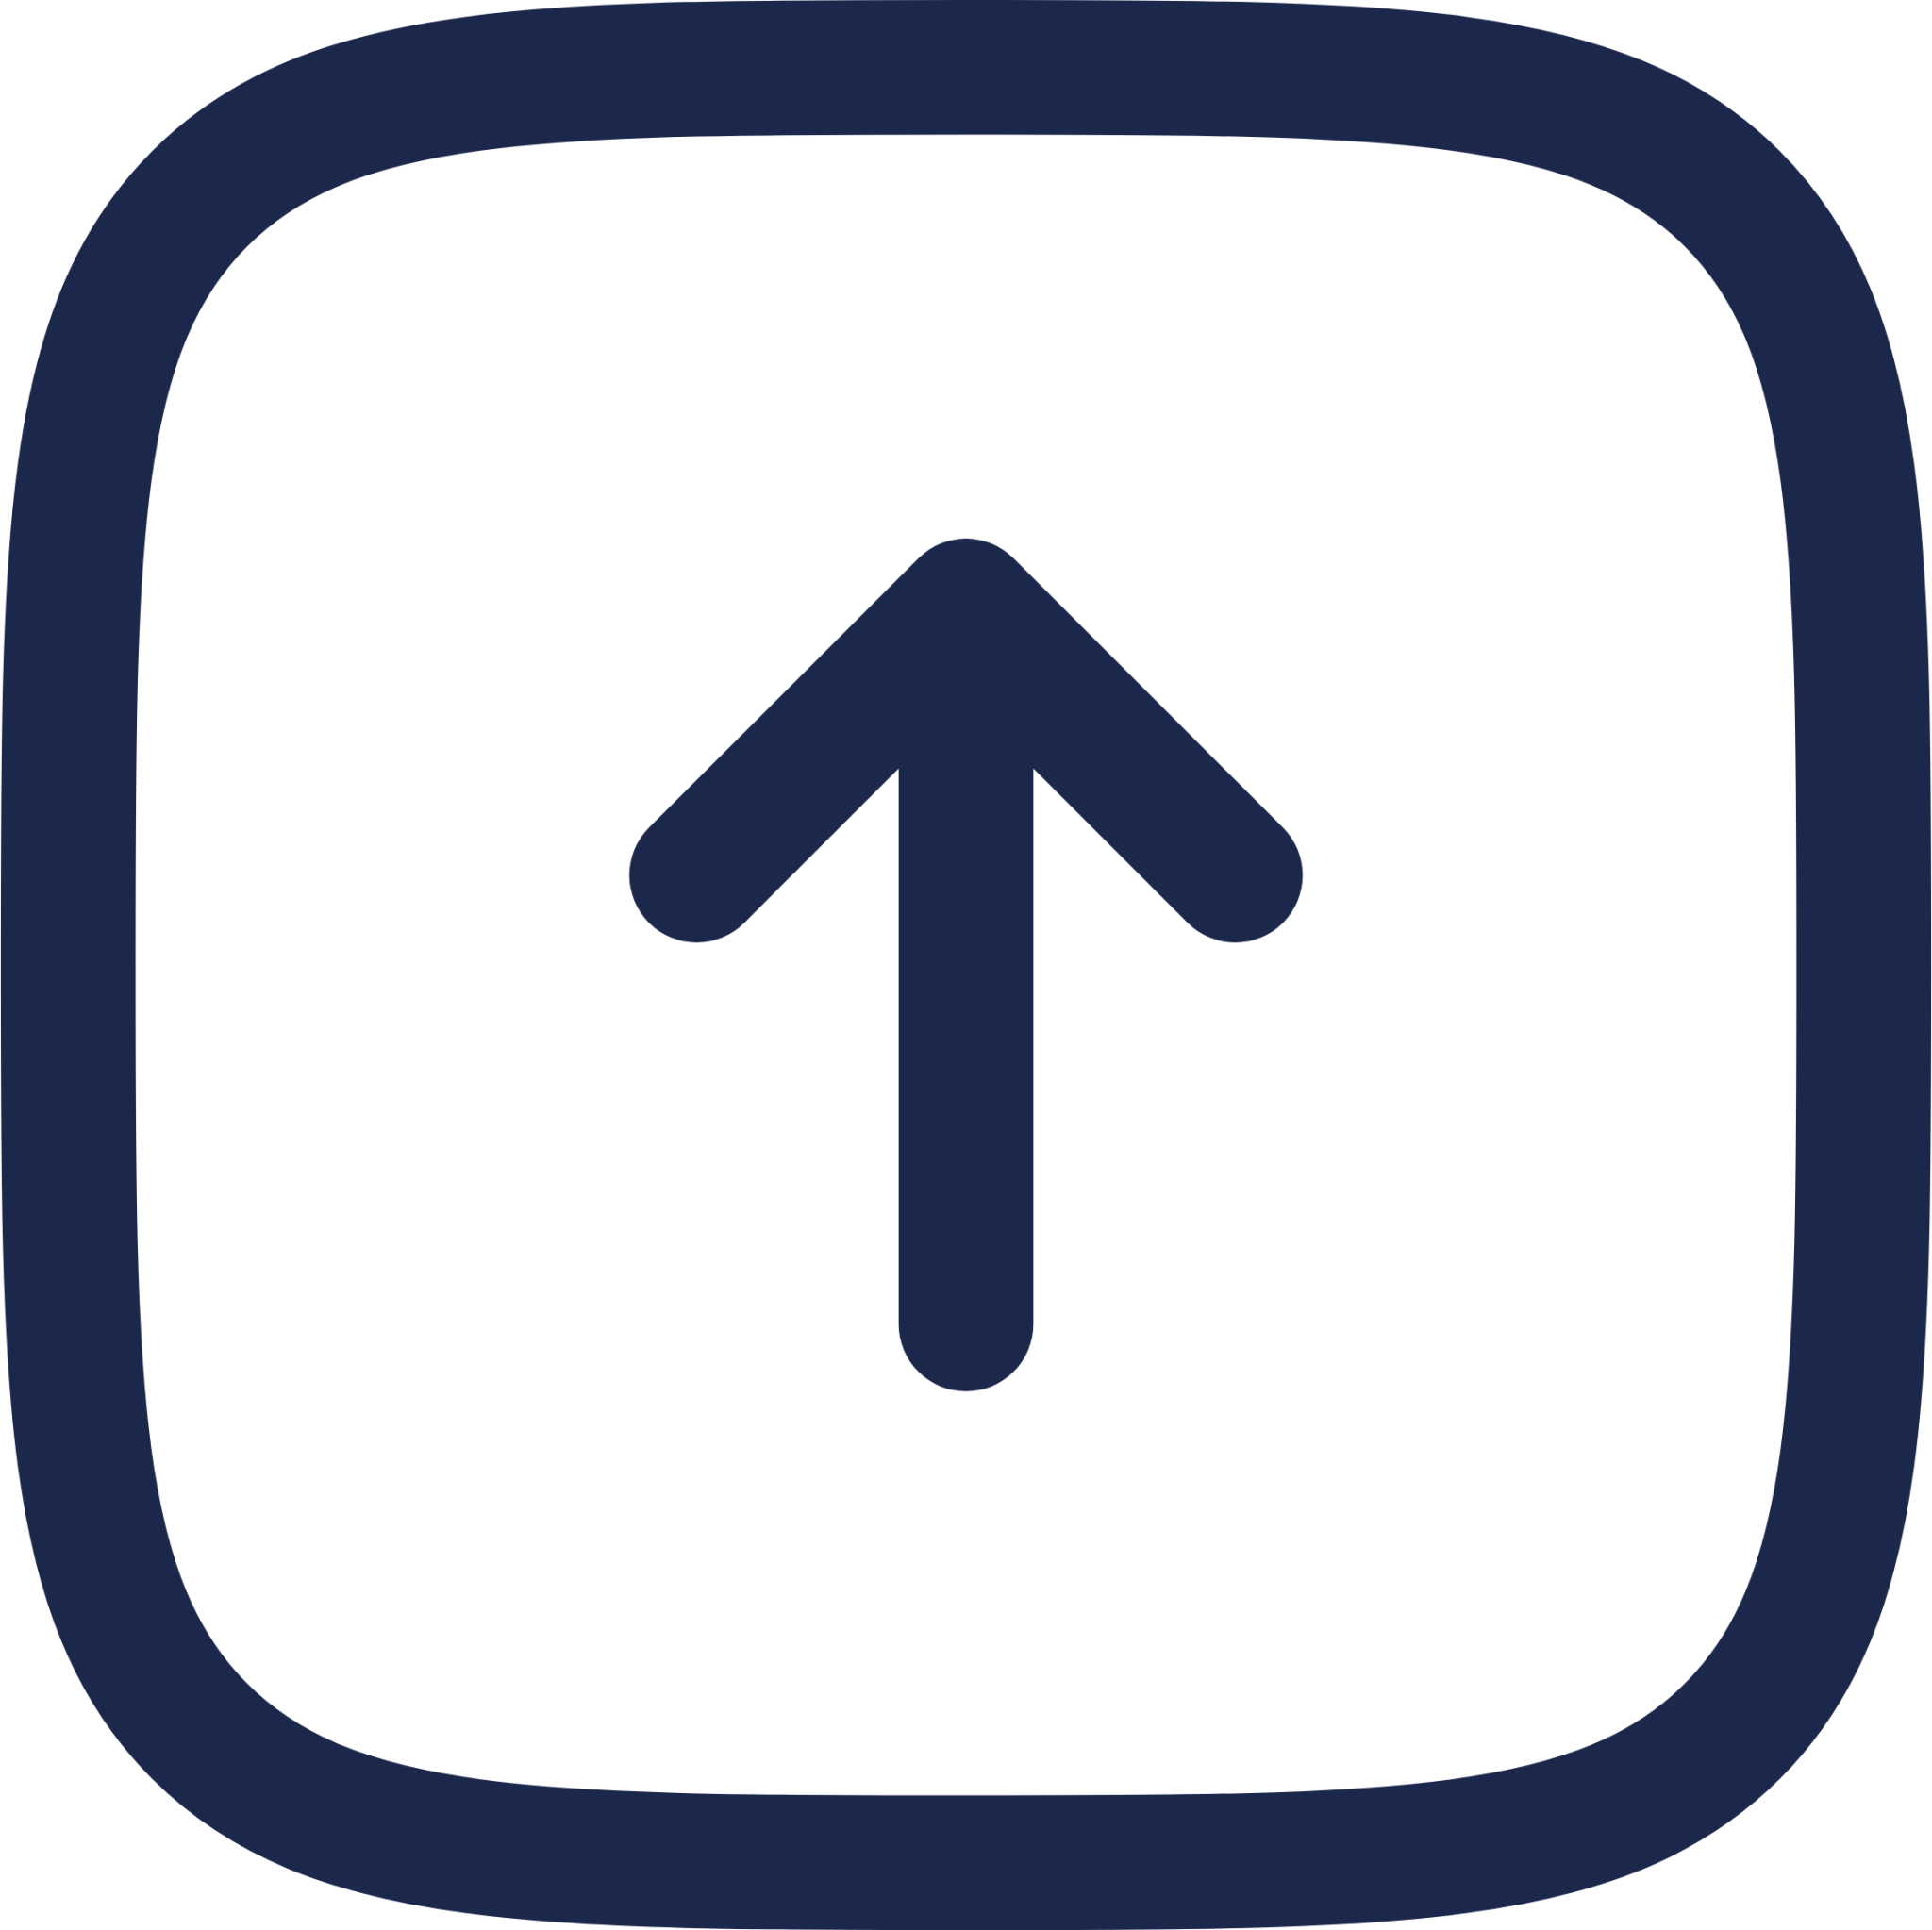 Square Arrow Up icon